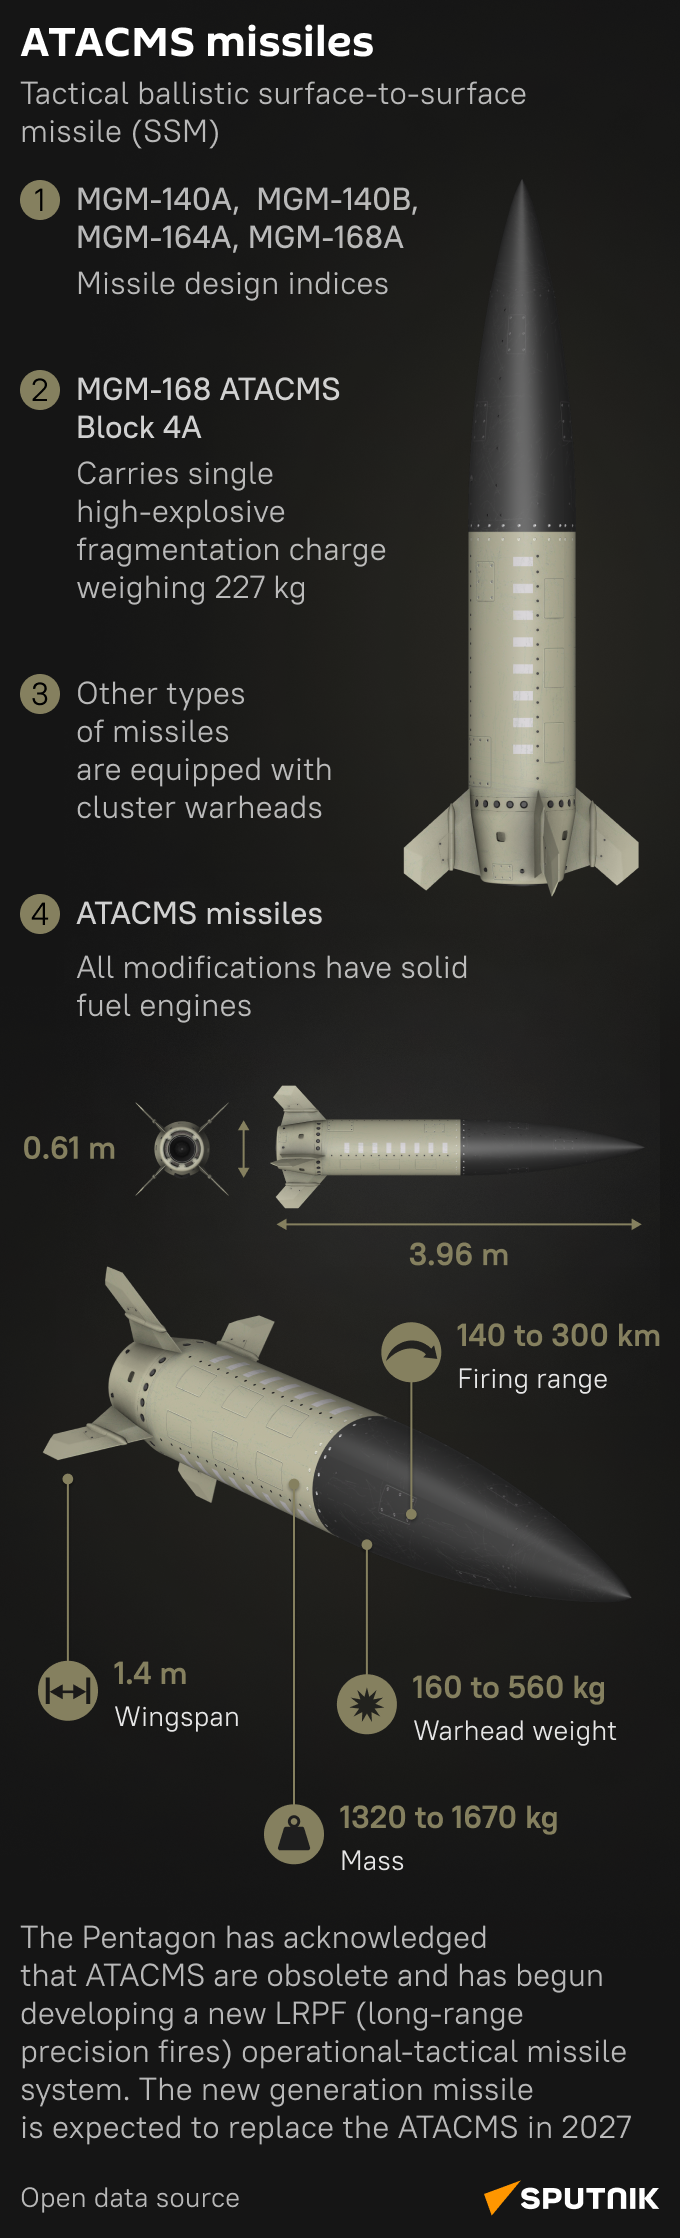 ATACMS missiles_mob - Sputnik India